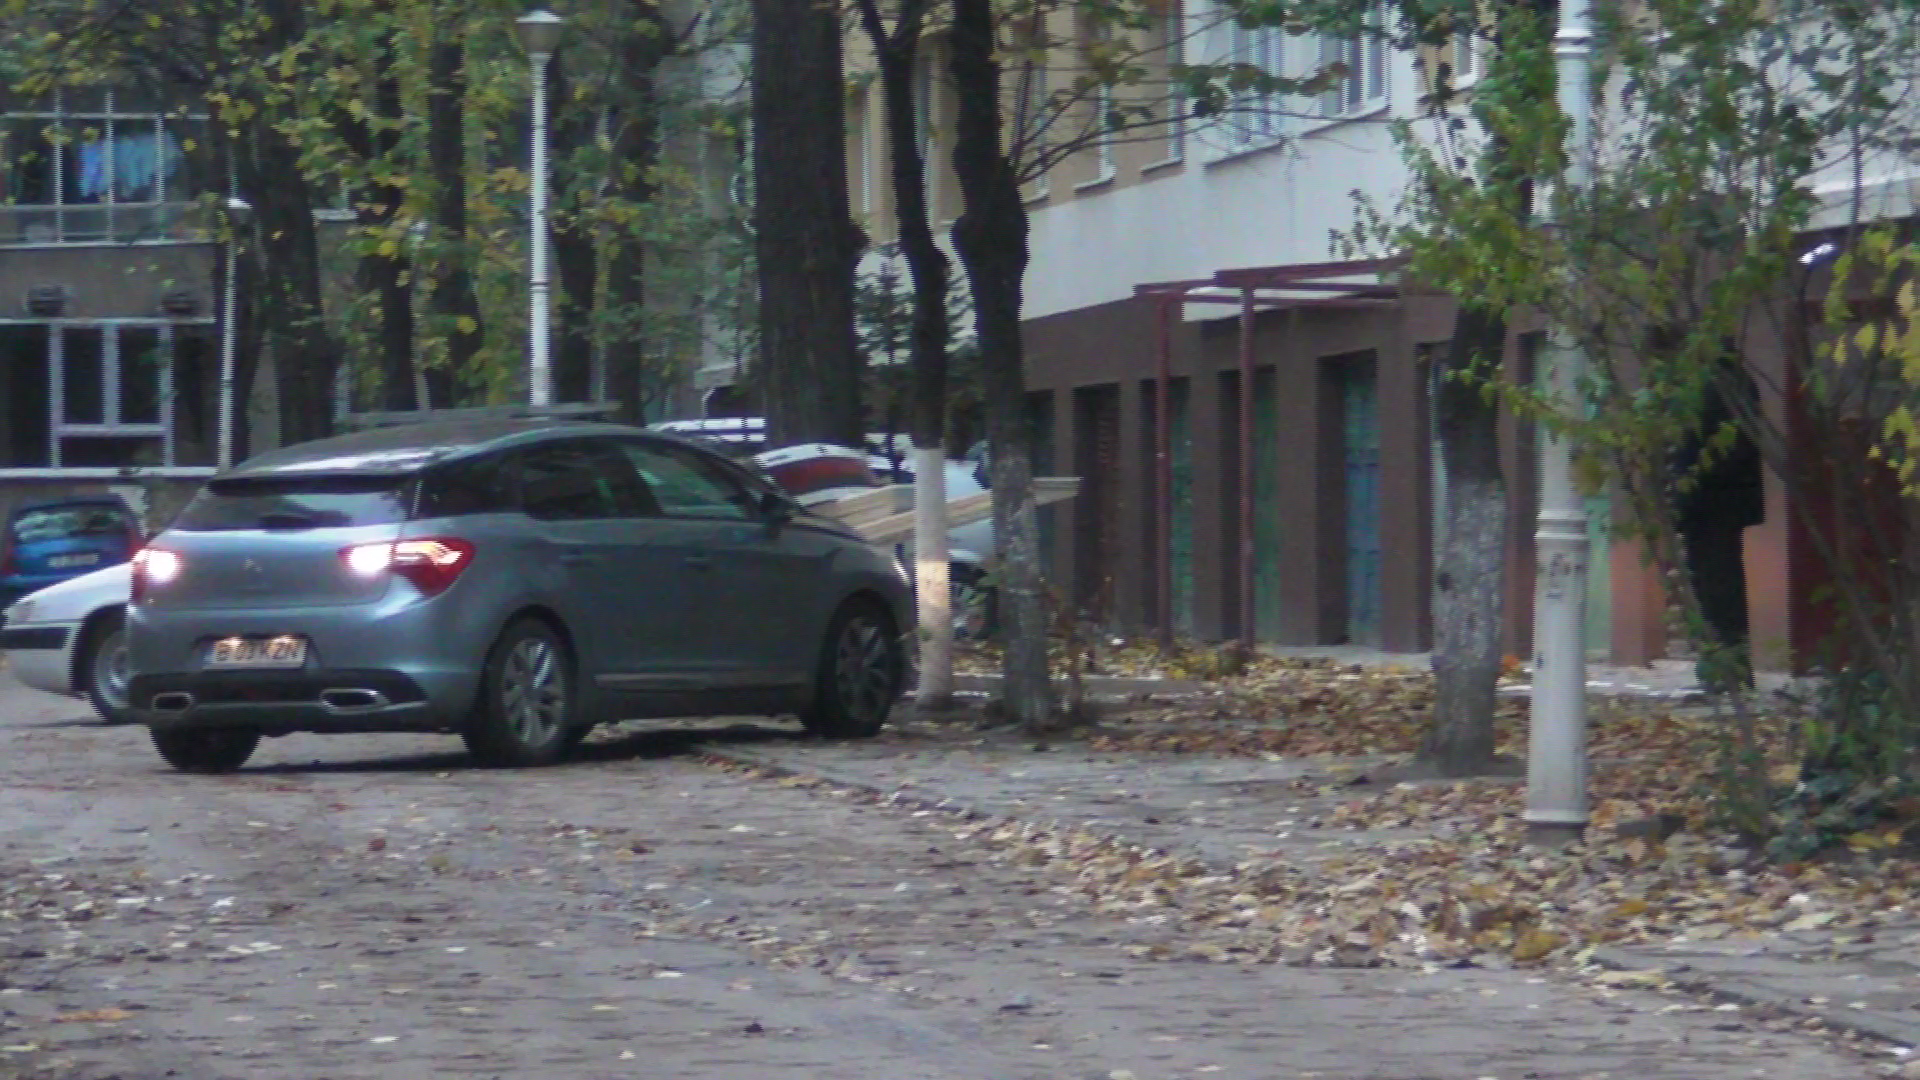 Razvan parcheaza masina, dupa ce il roaga pe un vecin sa isi traga autoturismul